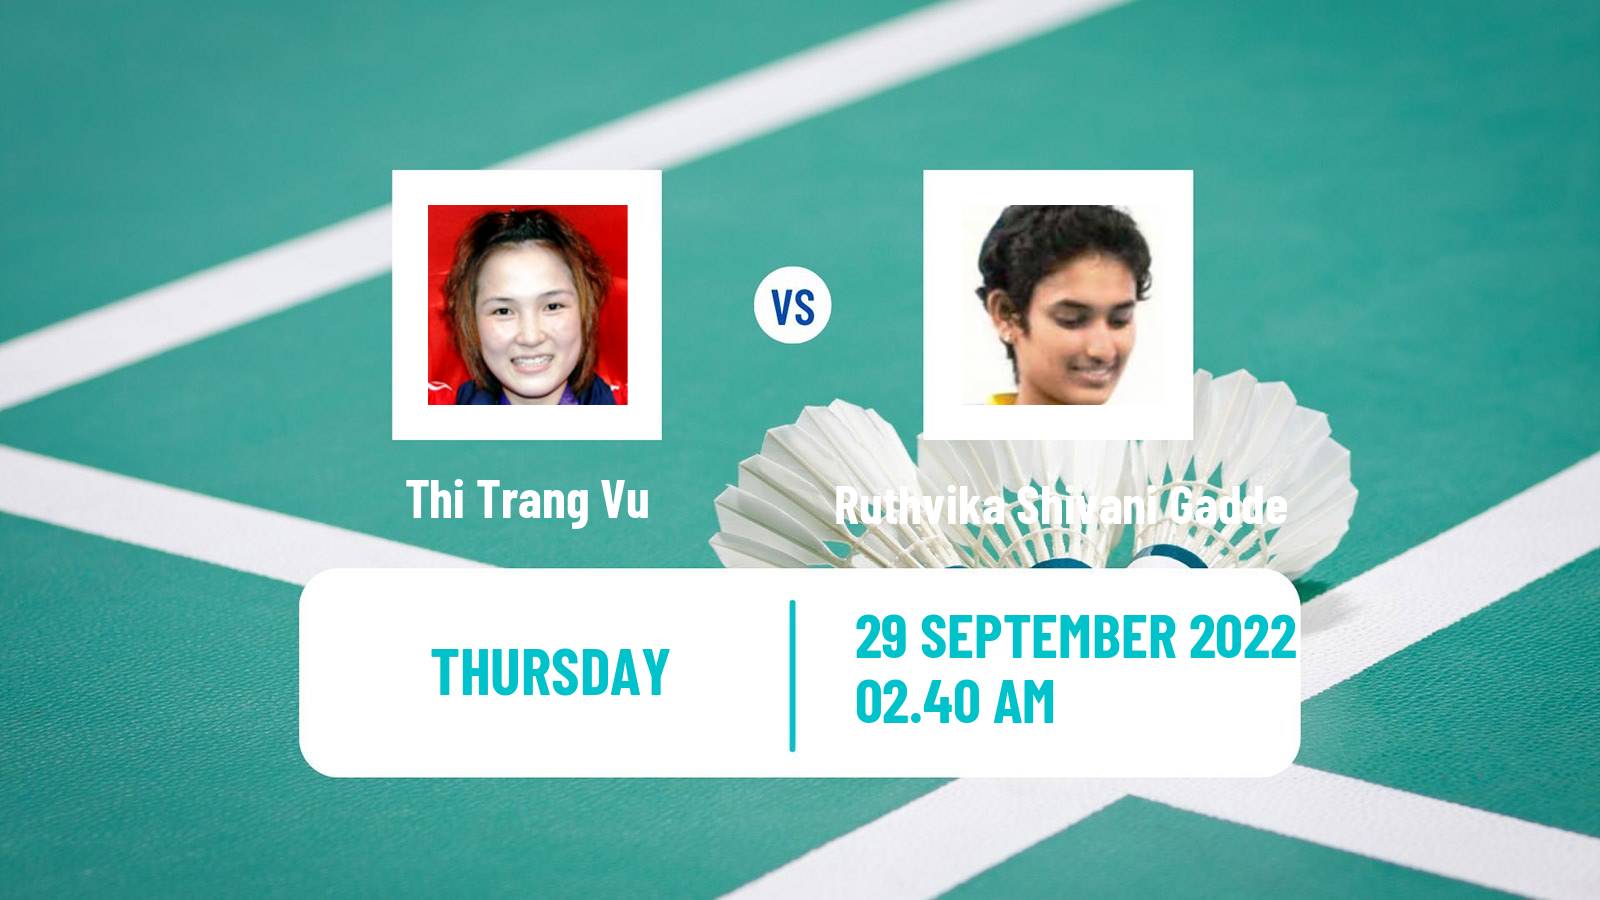 Badminton Badminton Thi Trang Vu - Ruthvika Shivani Gadde